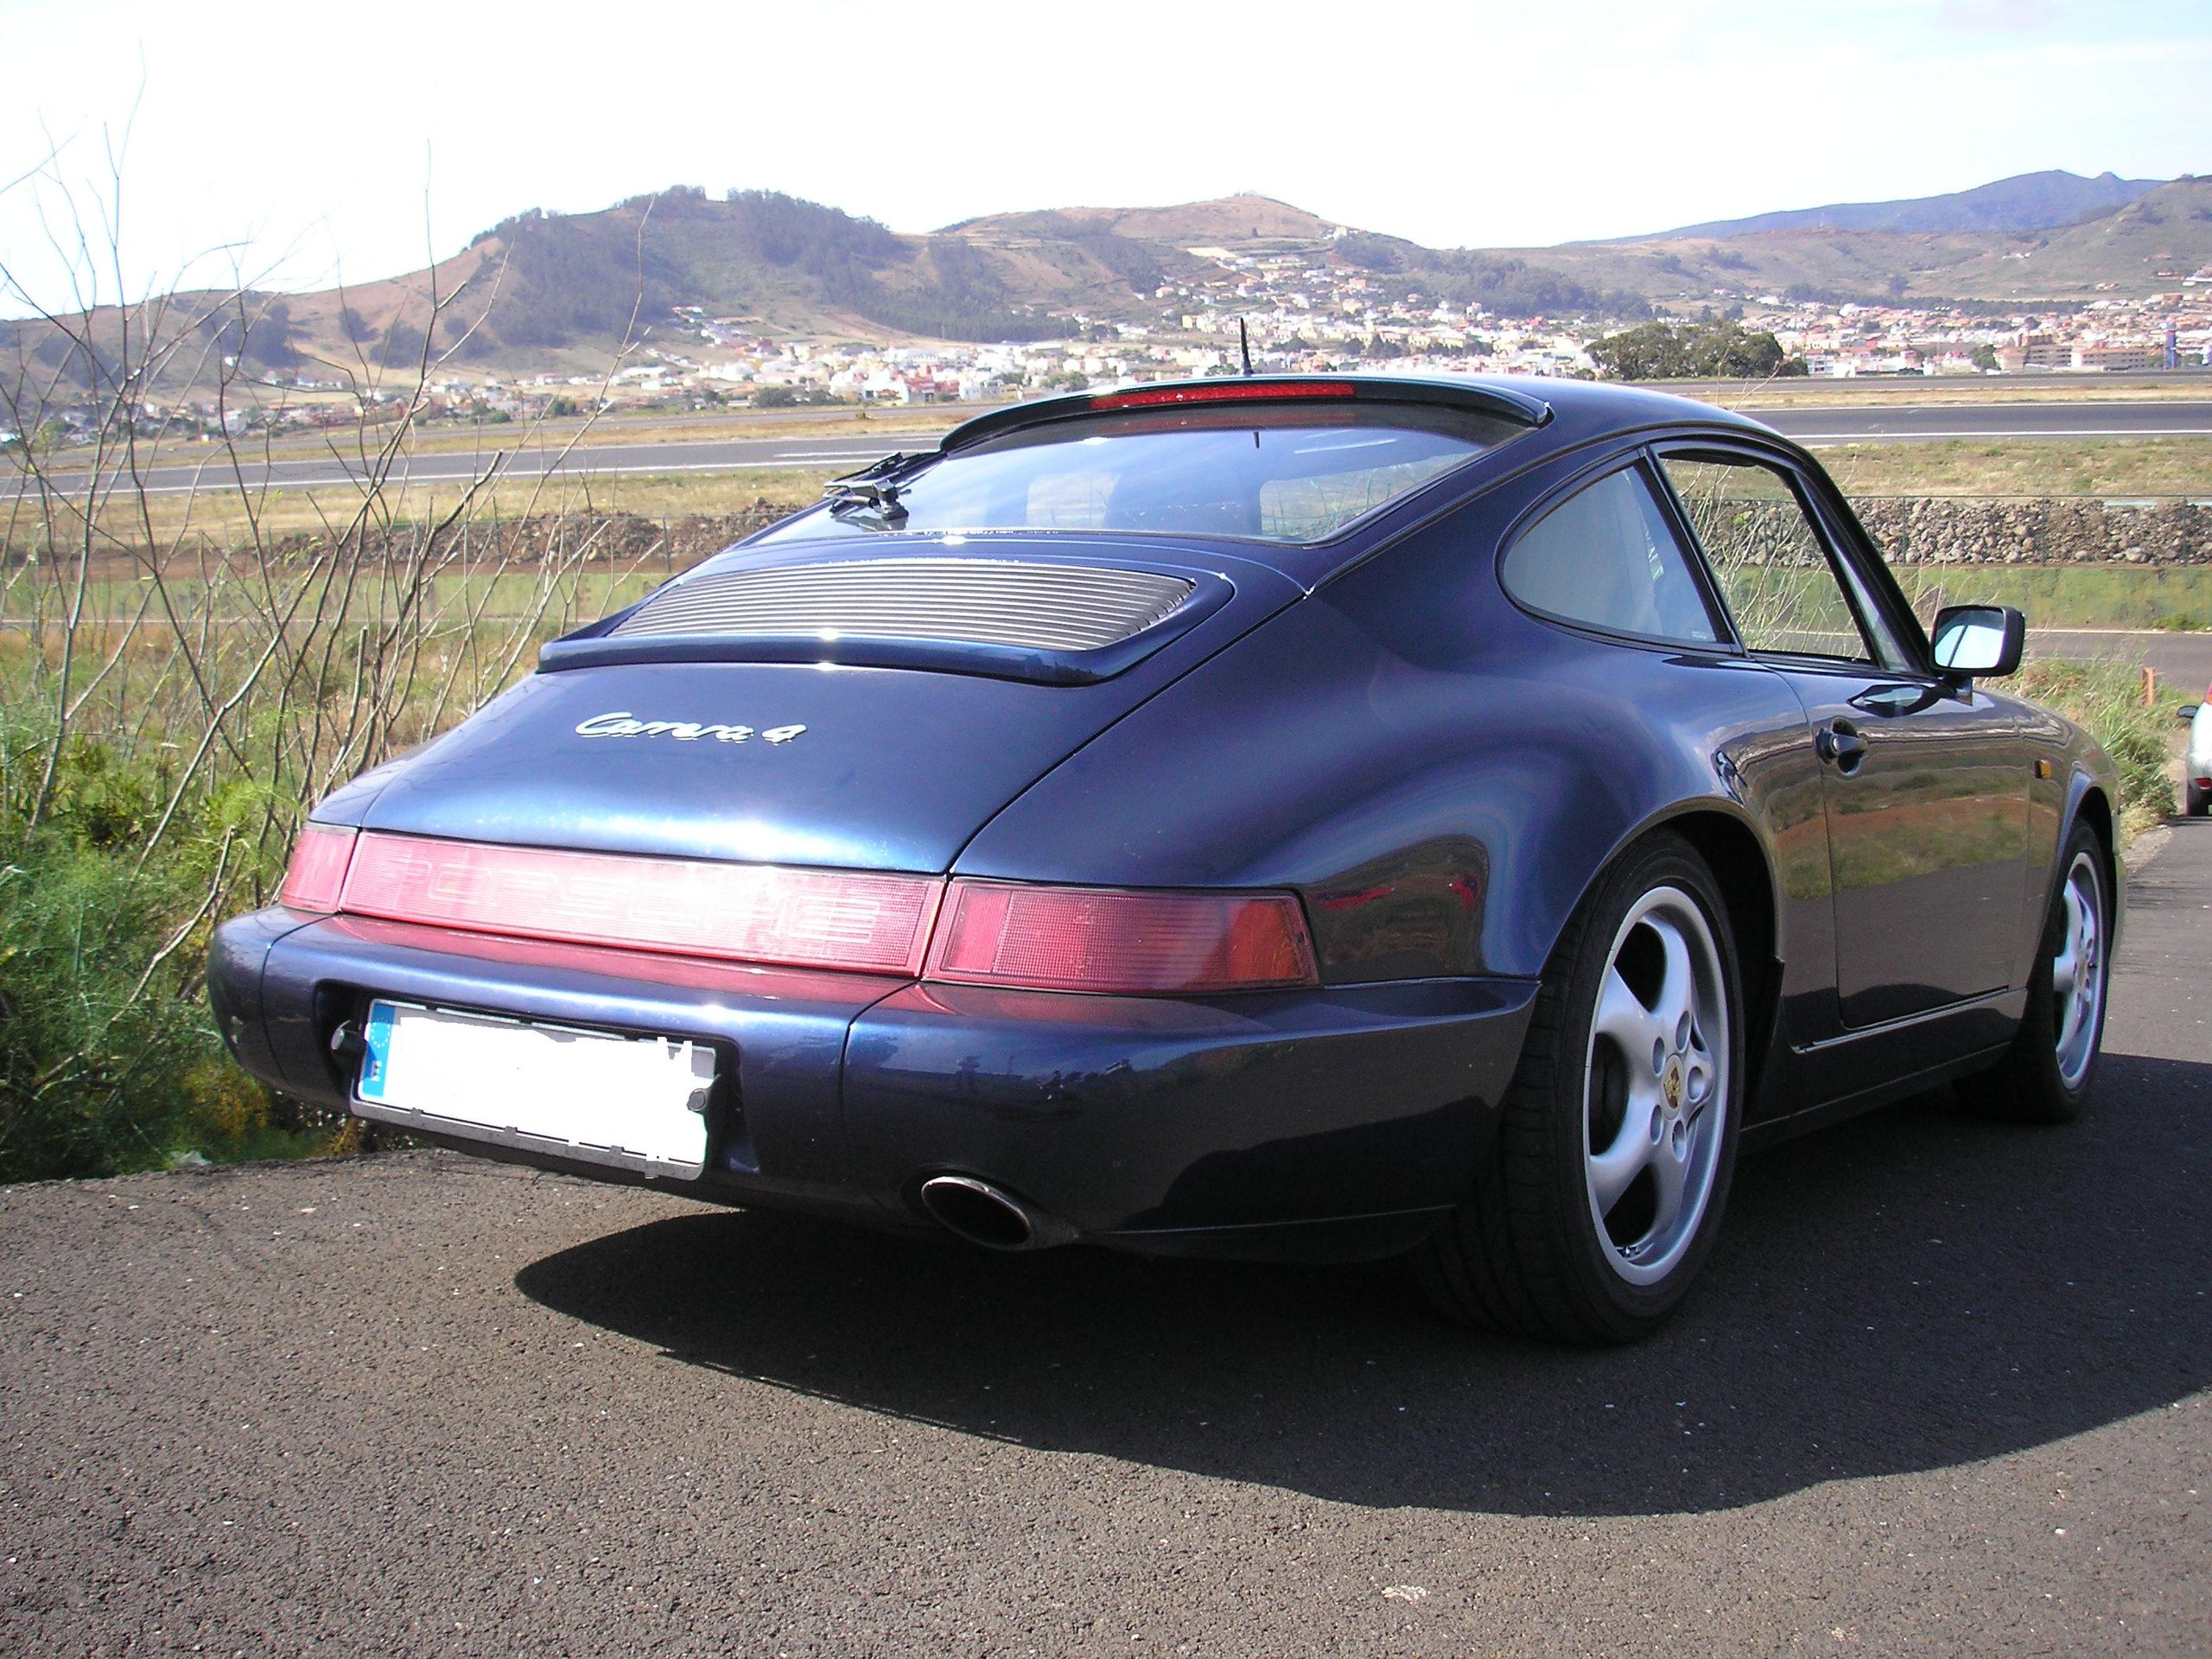 Porsche 911 (964) - Wikipedia